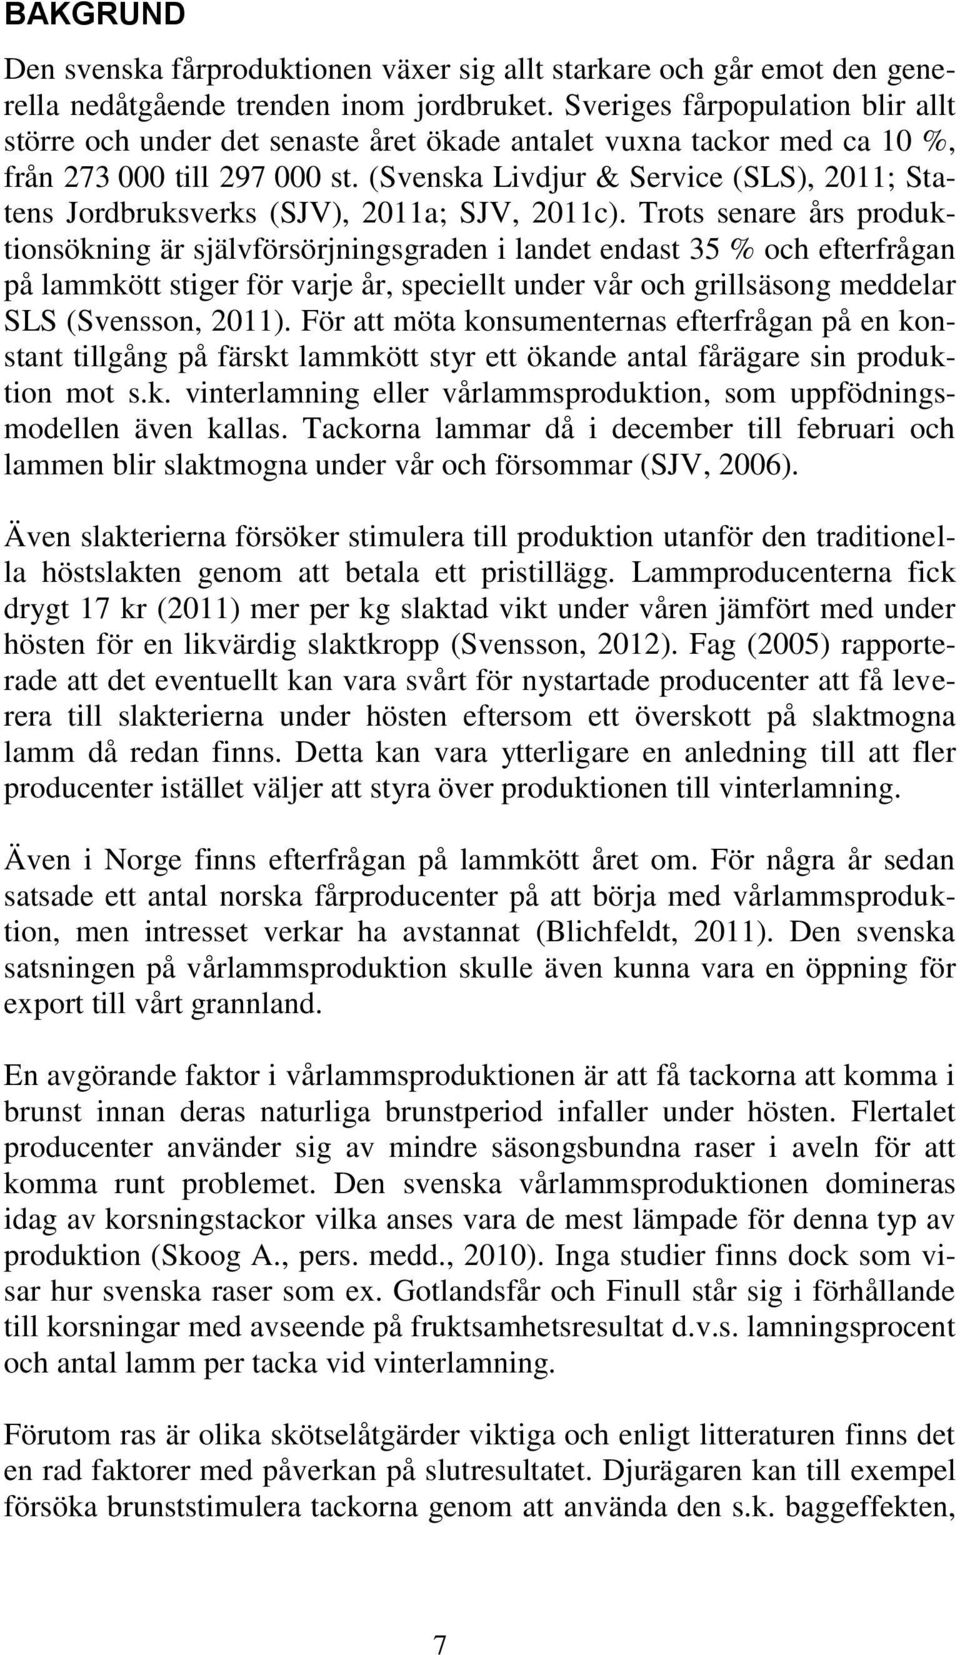 (Svenska Livdjur & Service (SLS), 2011; Statens Jordbruksverks (SJV), 2011a; SJV, 2011c).